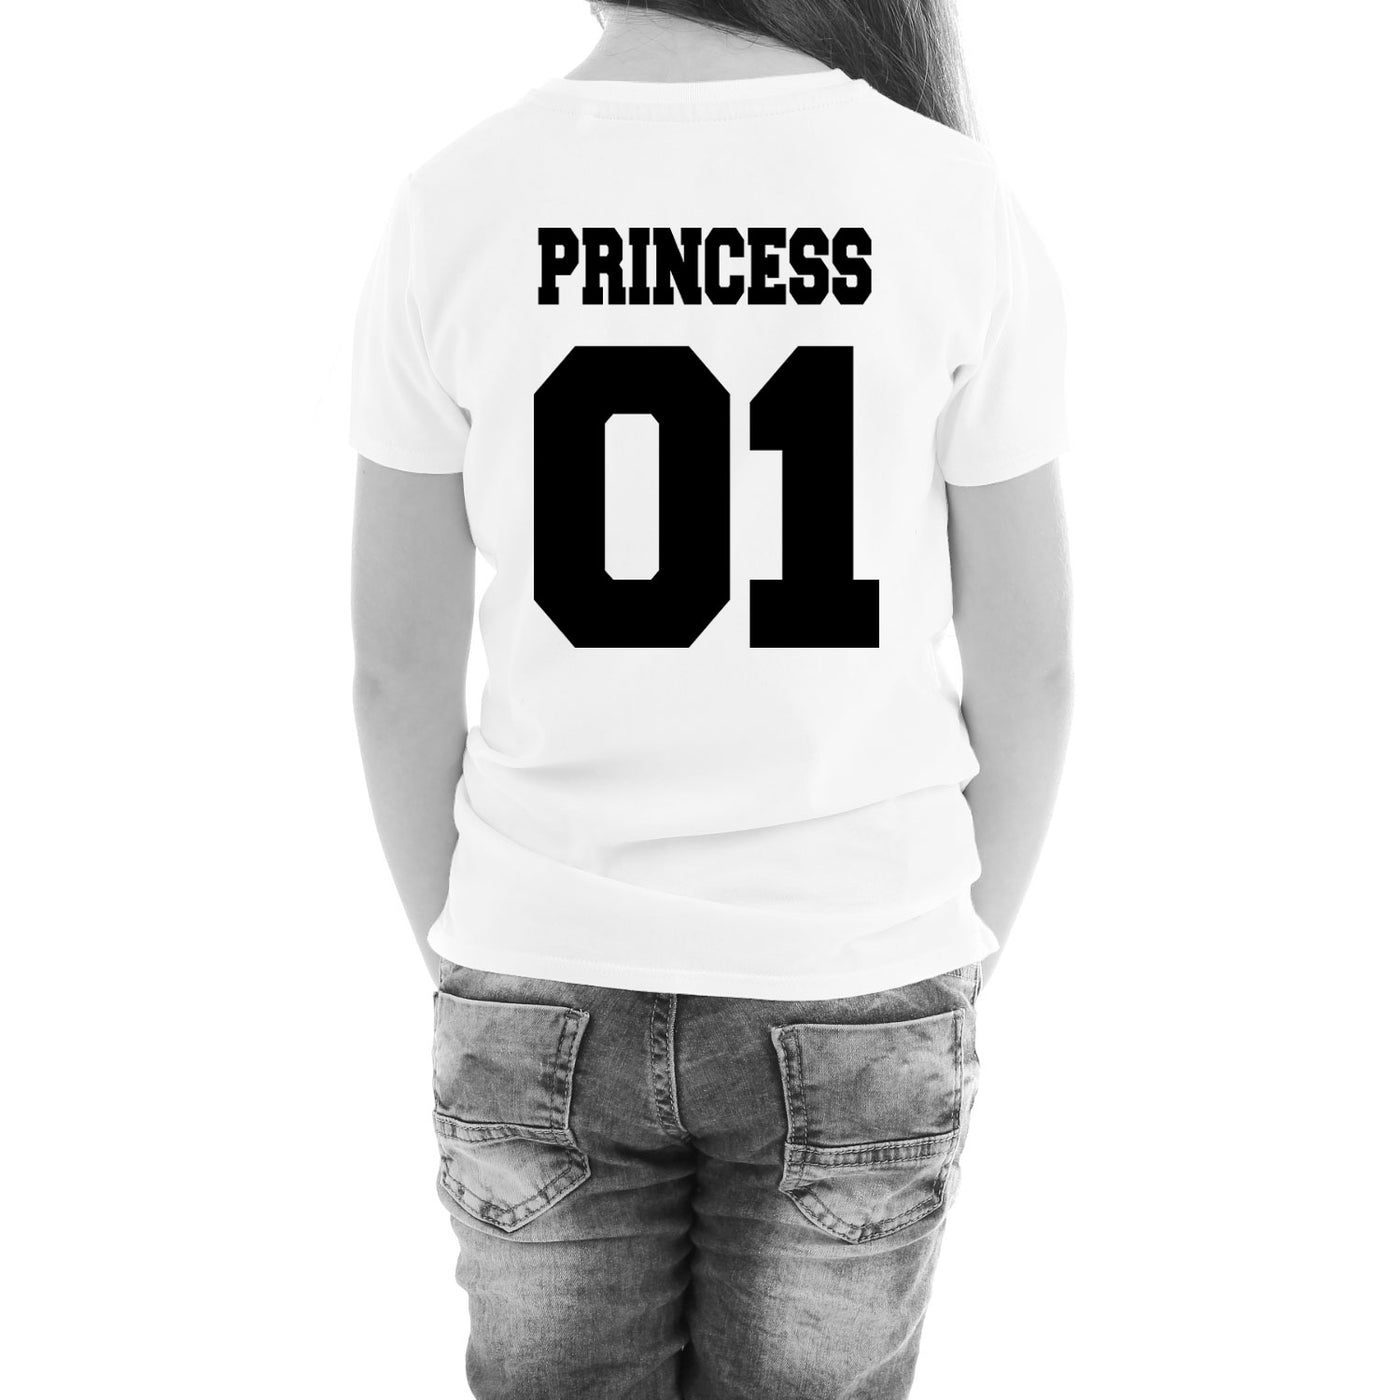 princess-01-weiss5978ab7285292